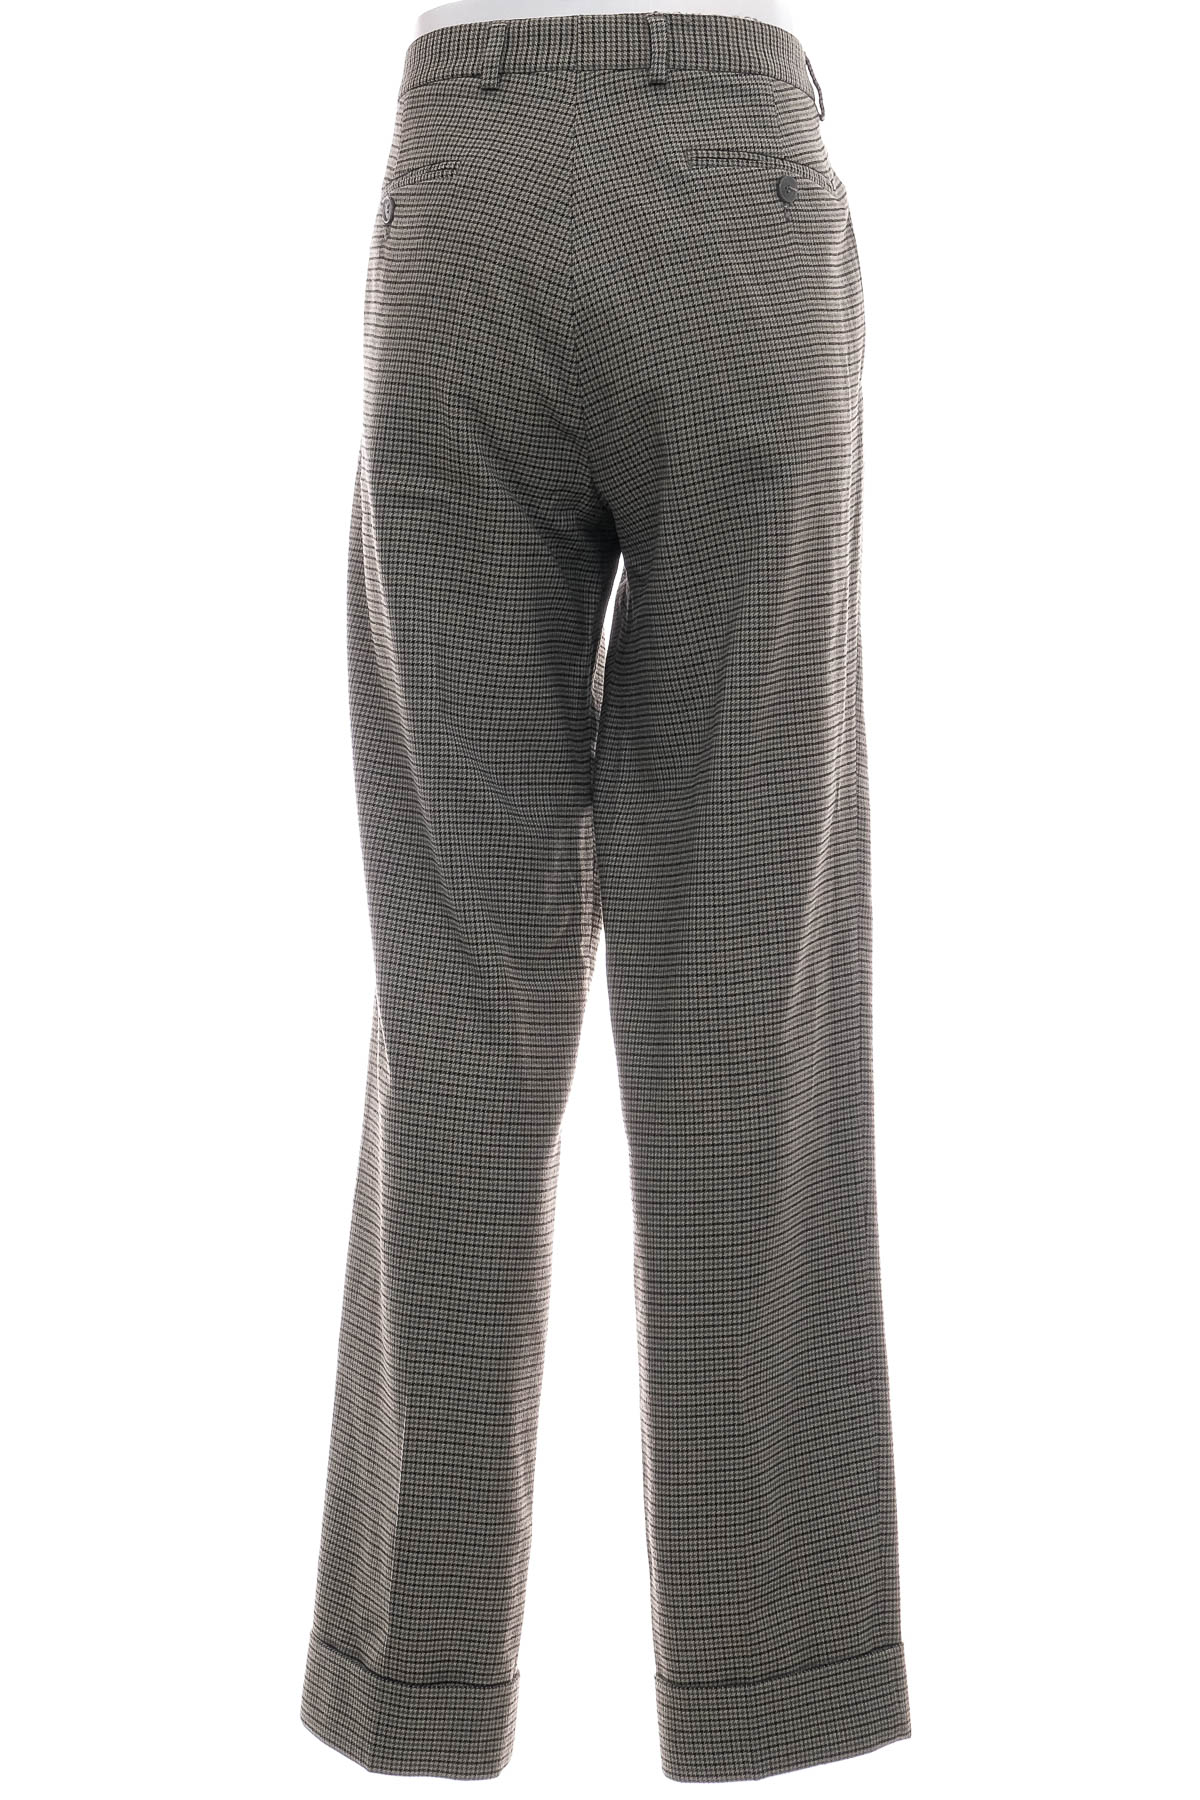 Pantalon pentru bărbați - MEXX - 1